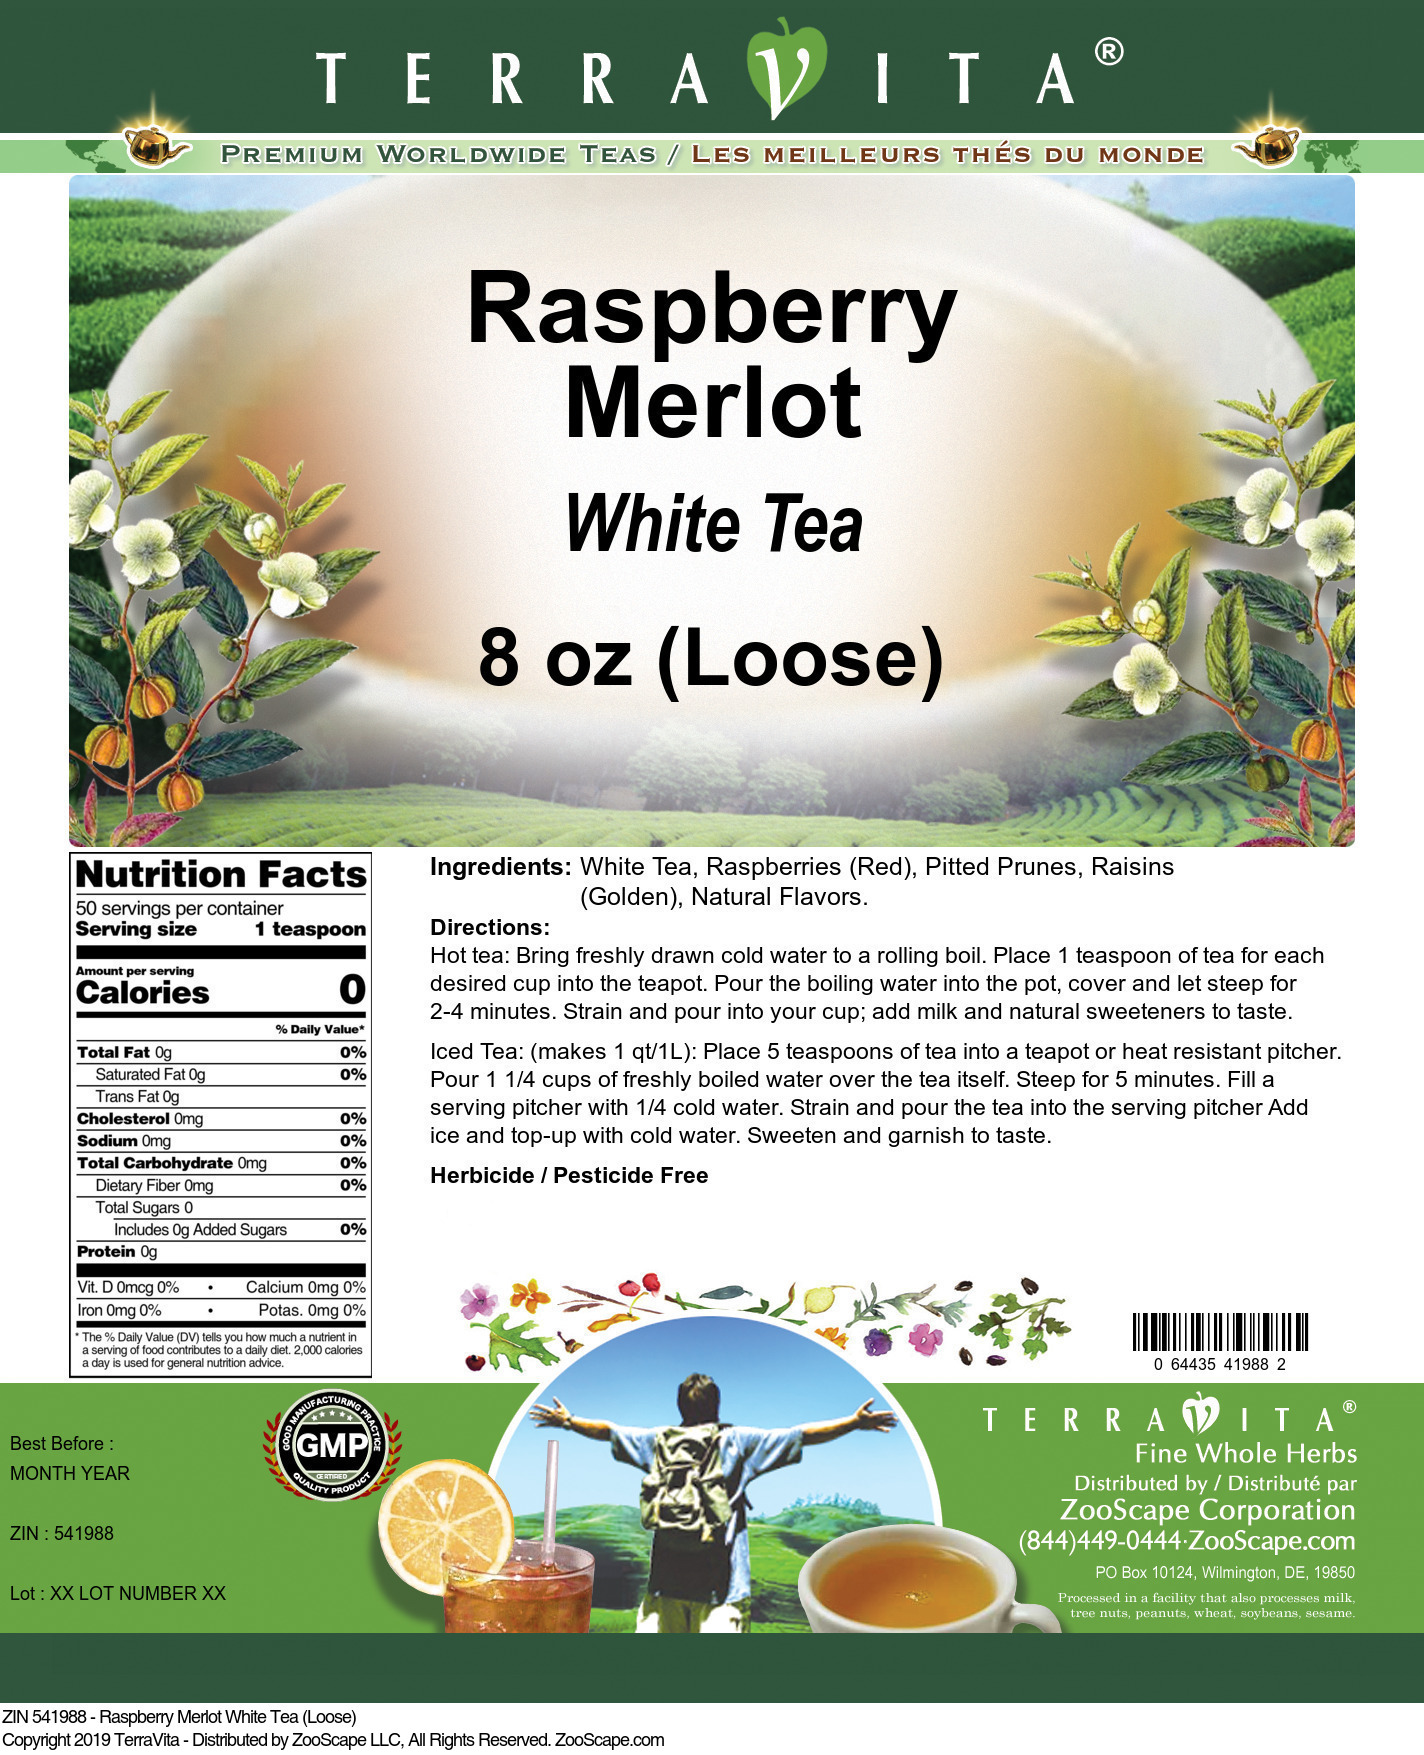 Raspberry Merlot White Tea (Loose) - Label